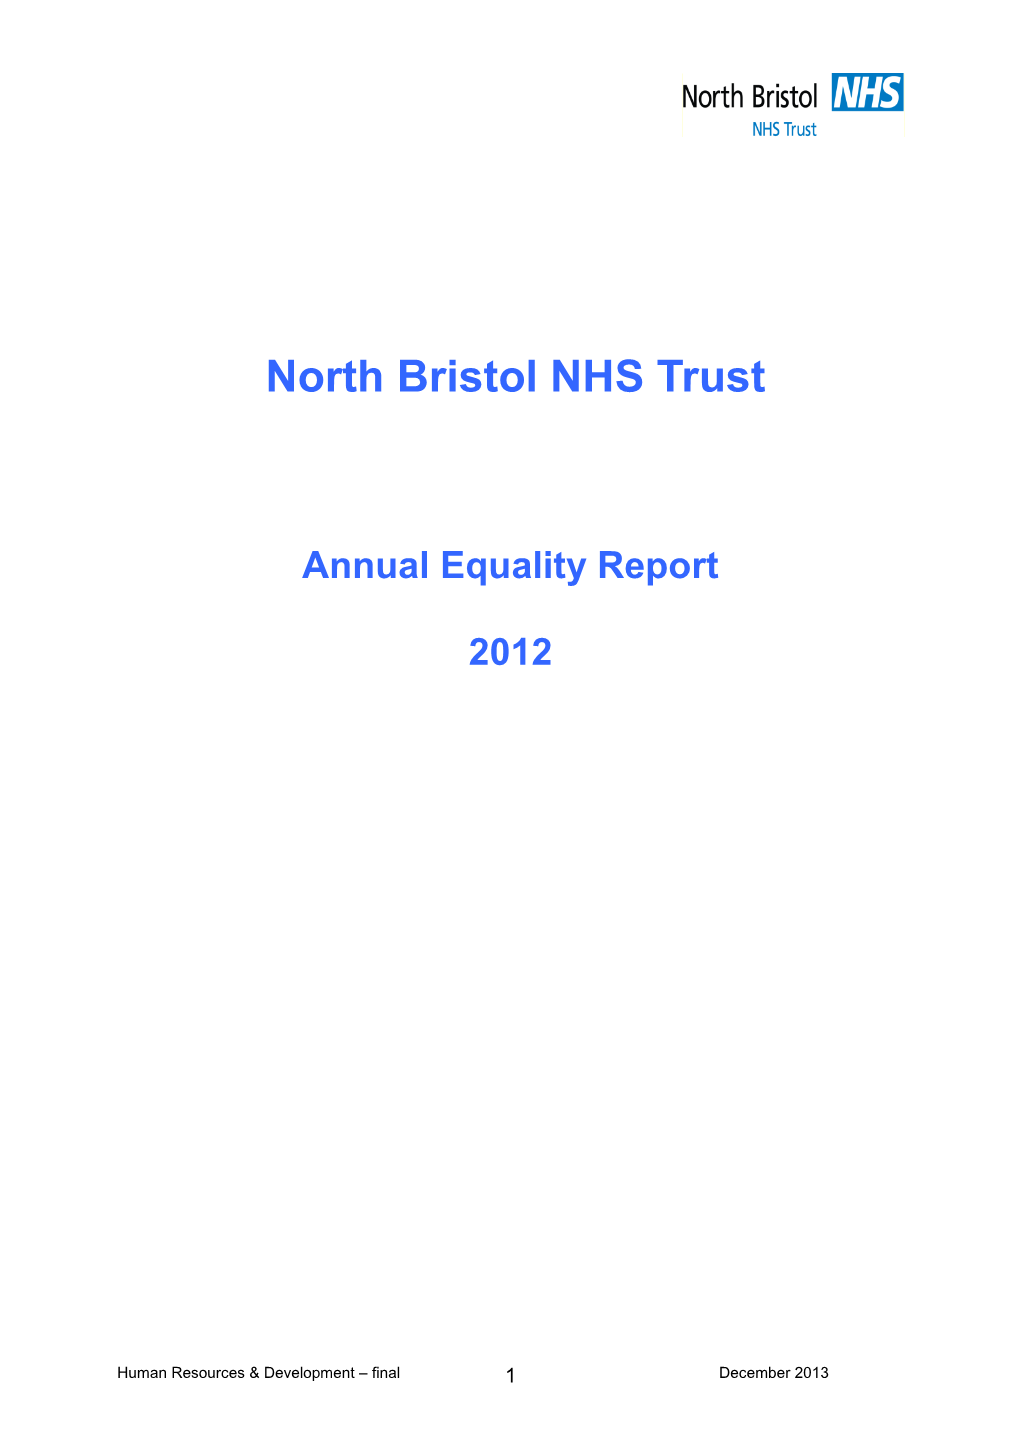 North Bristol NHS Trust Annual Equality Report 2012-2013.Pdf